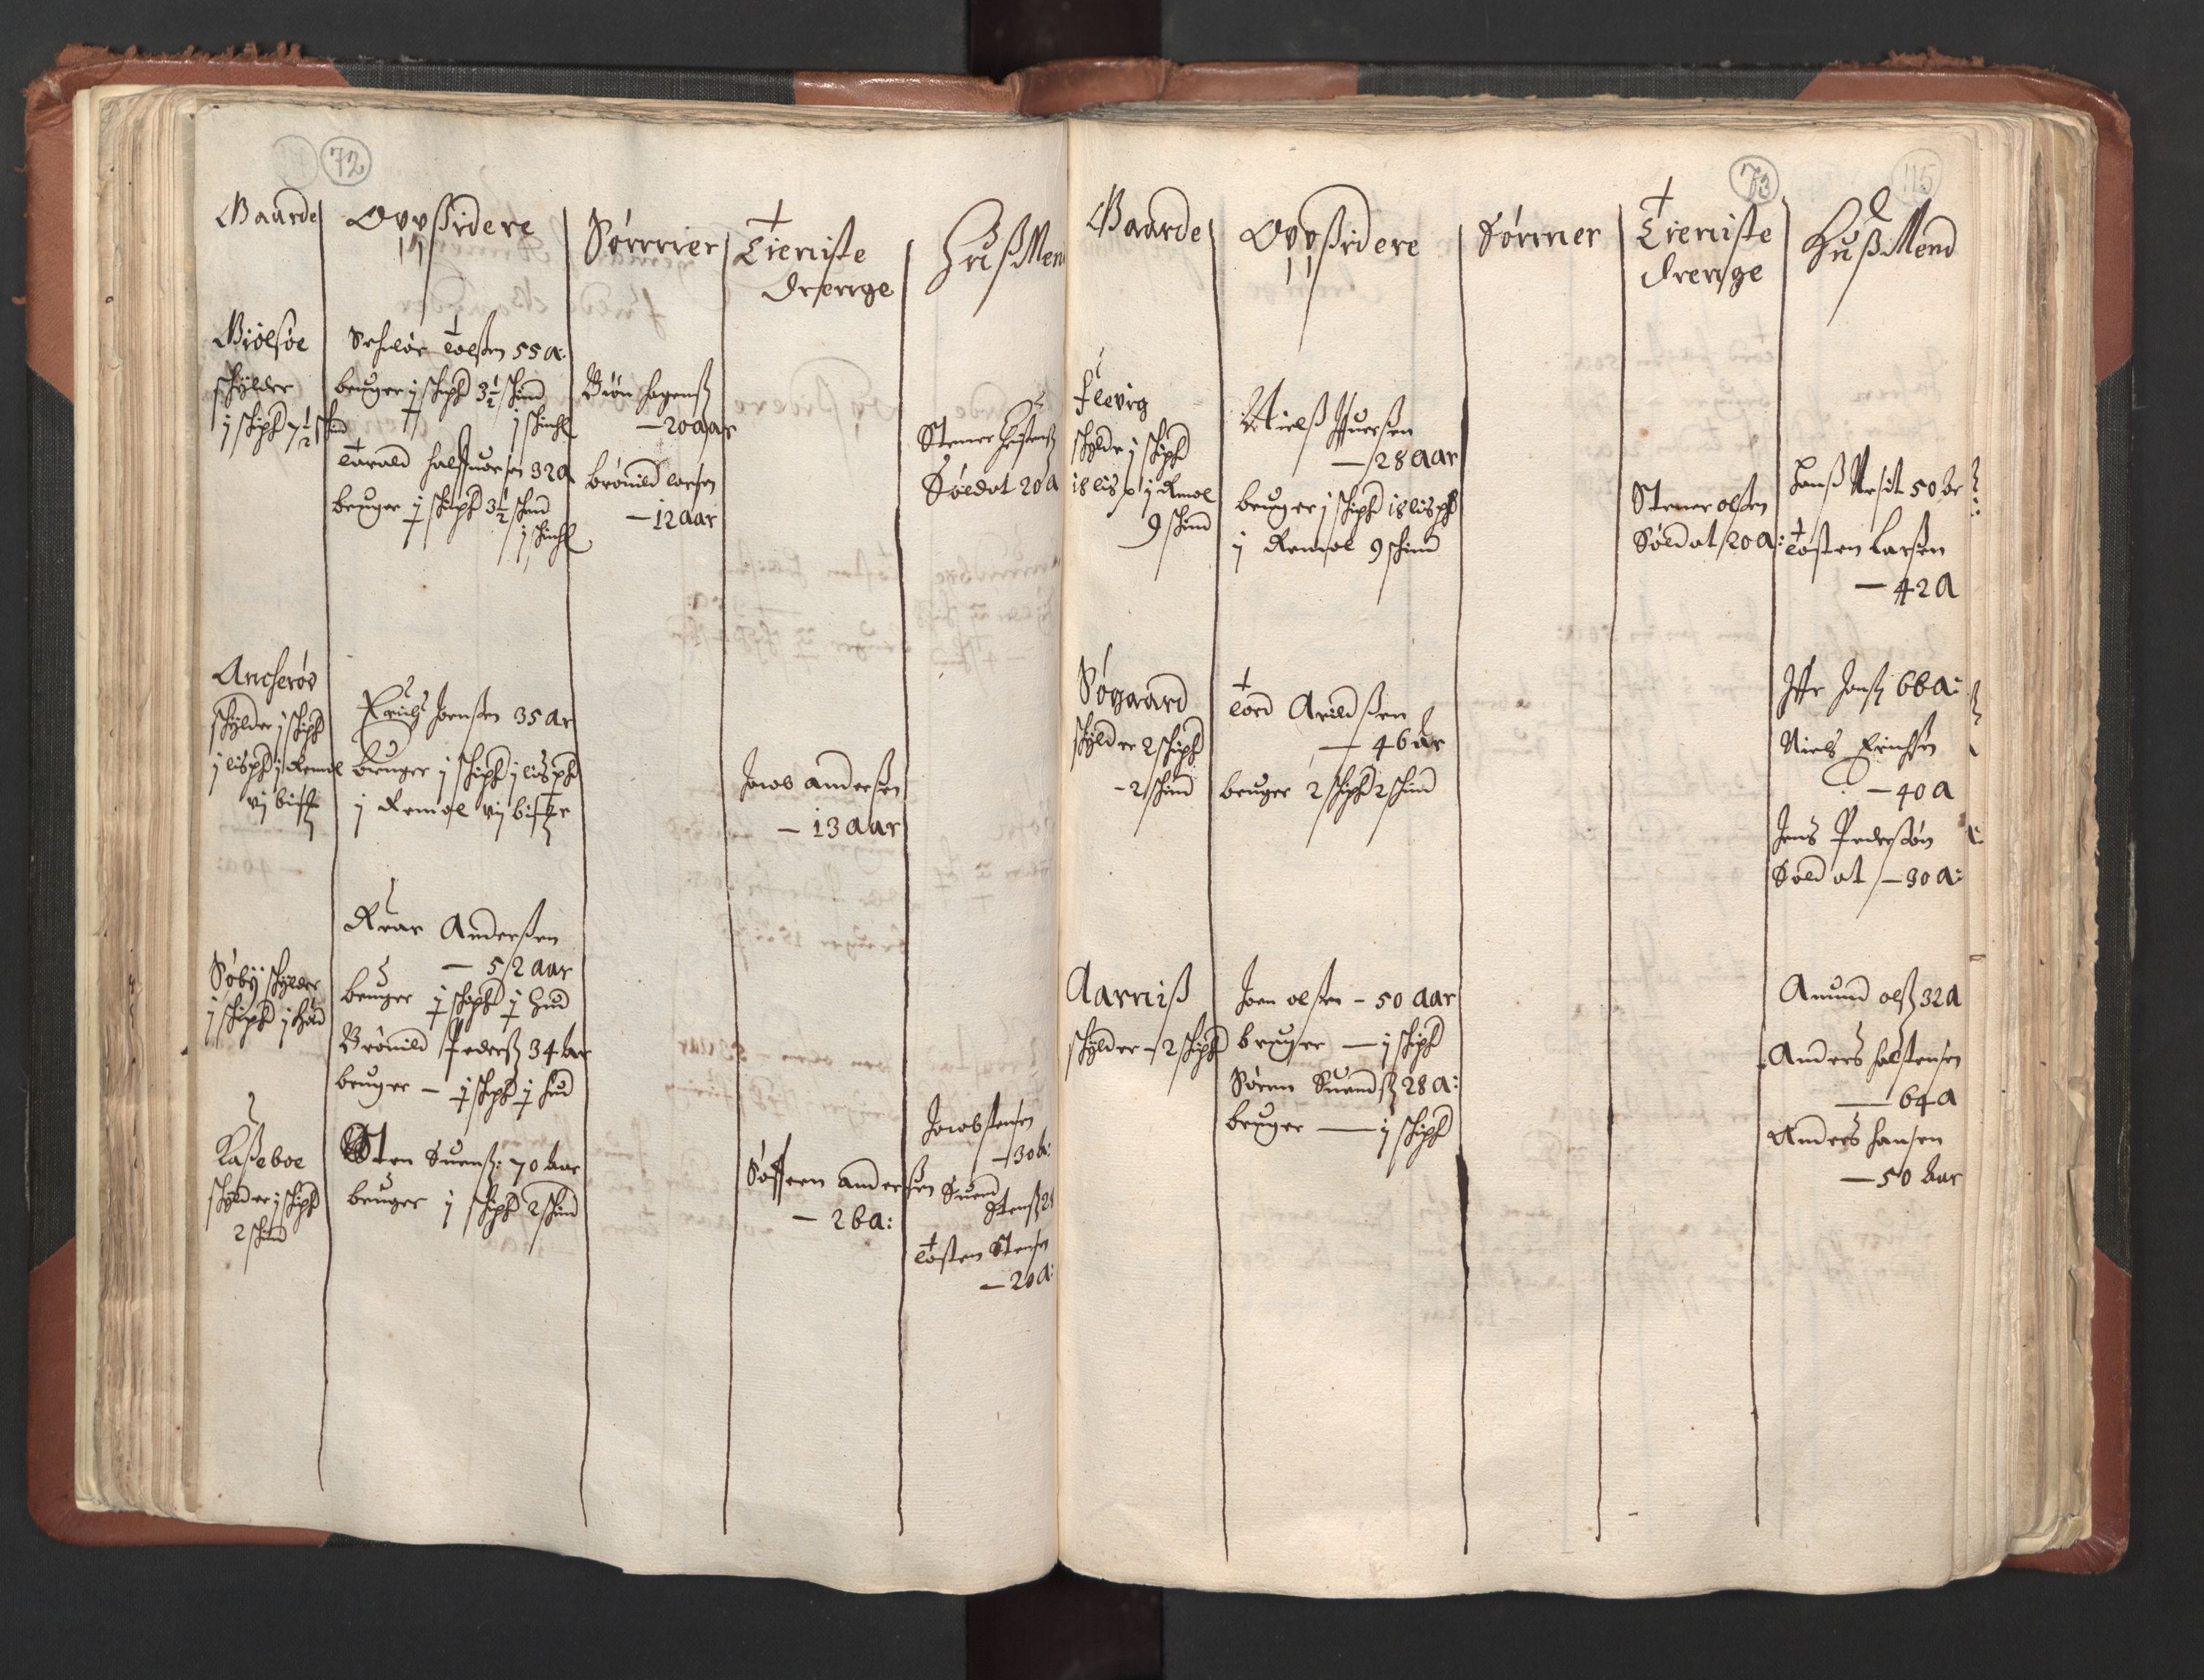 RA, Fogdenes og sorenskrivernes manntall 1664-1666, nr. 1: Fogderier (len og skipreider) i nåværende Østfold fylke, 1664, s. 72-73